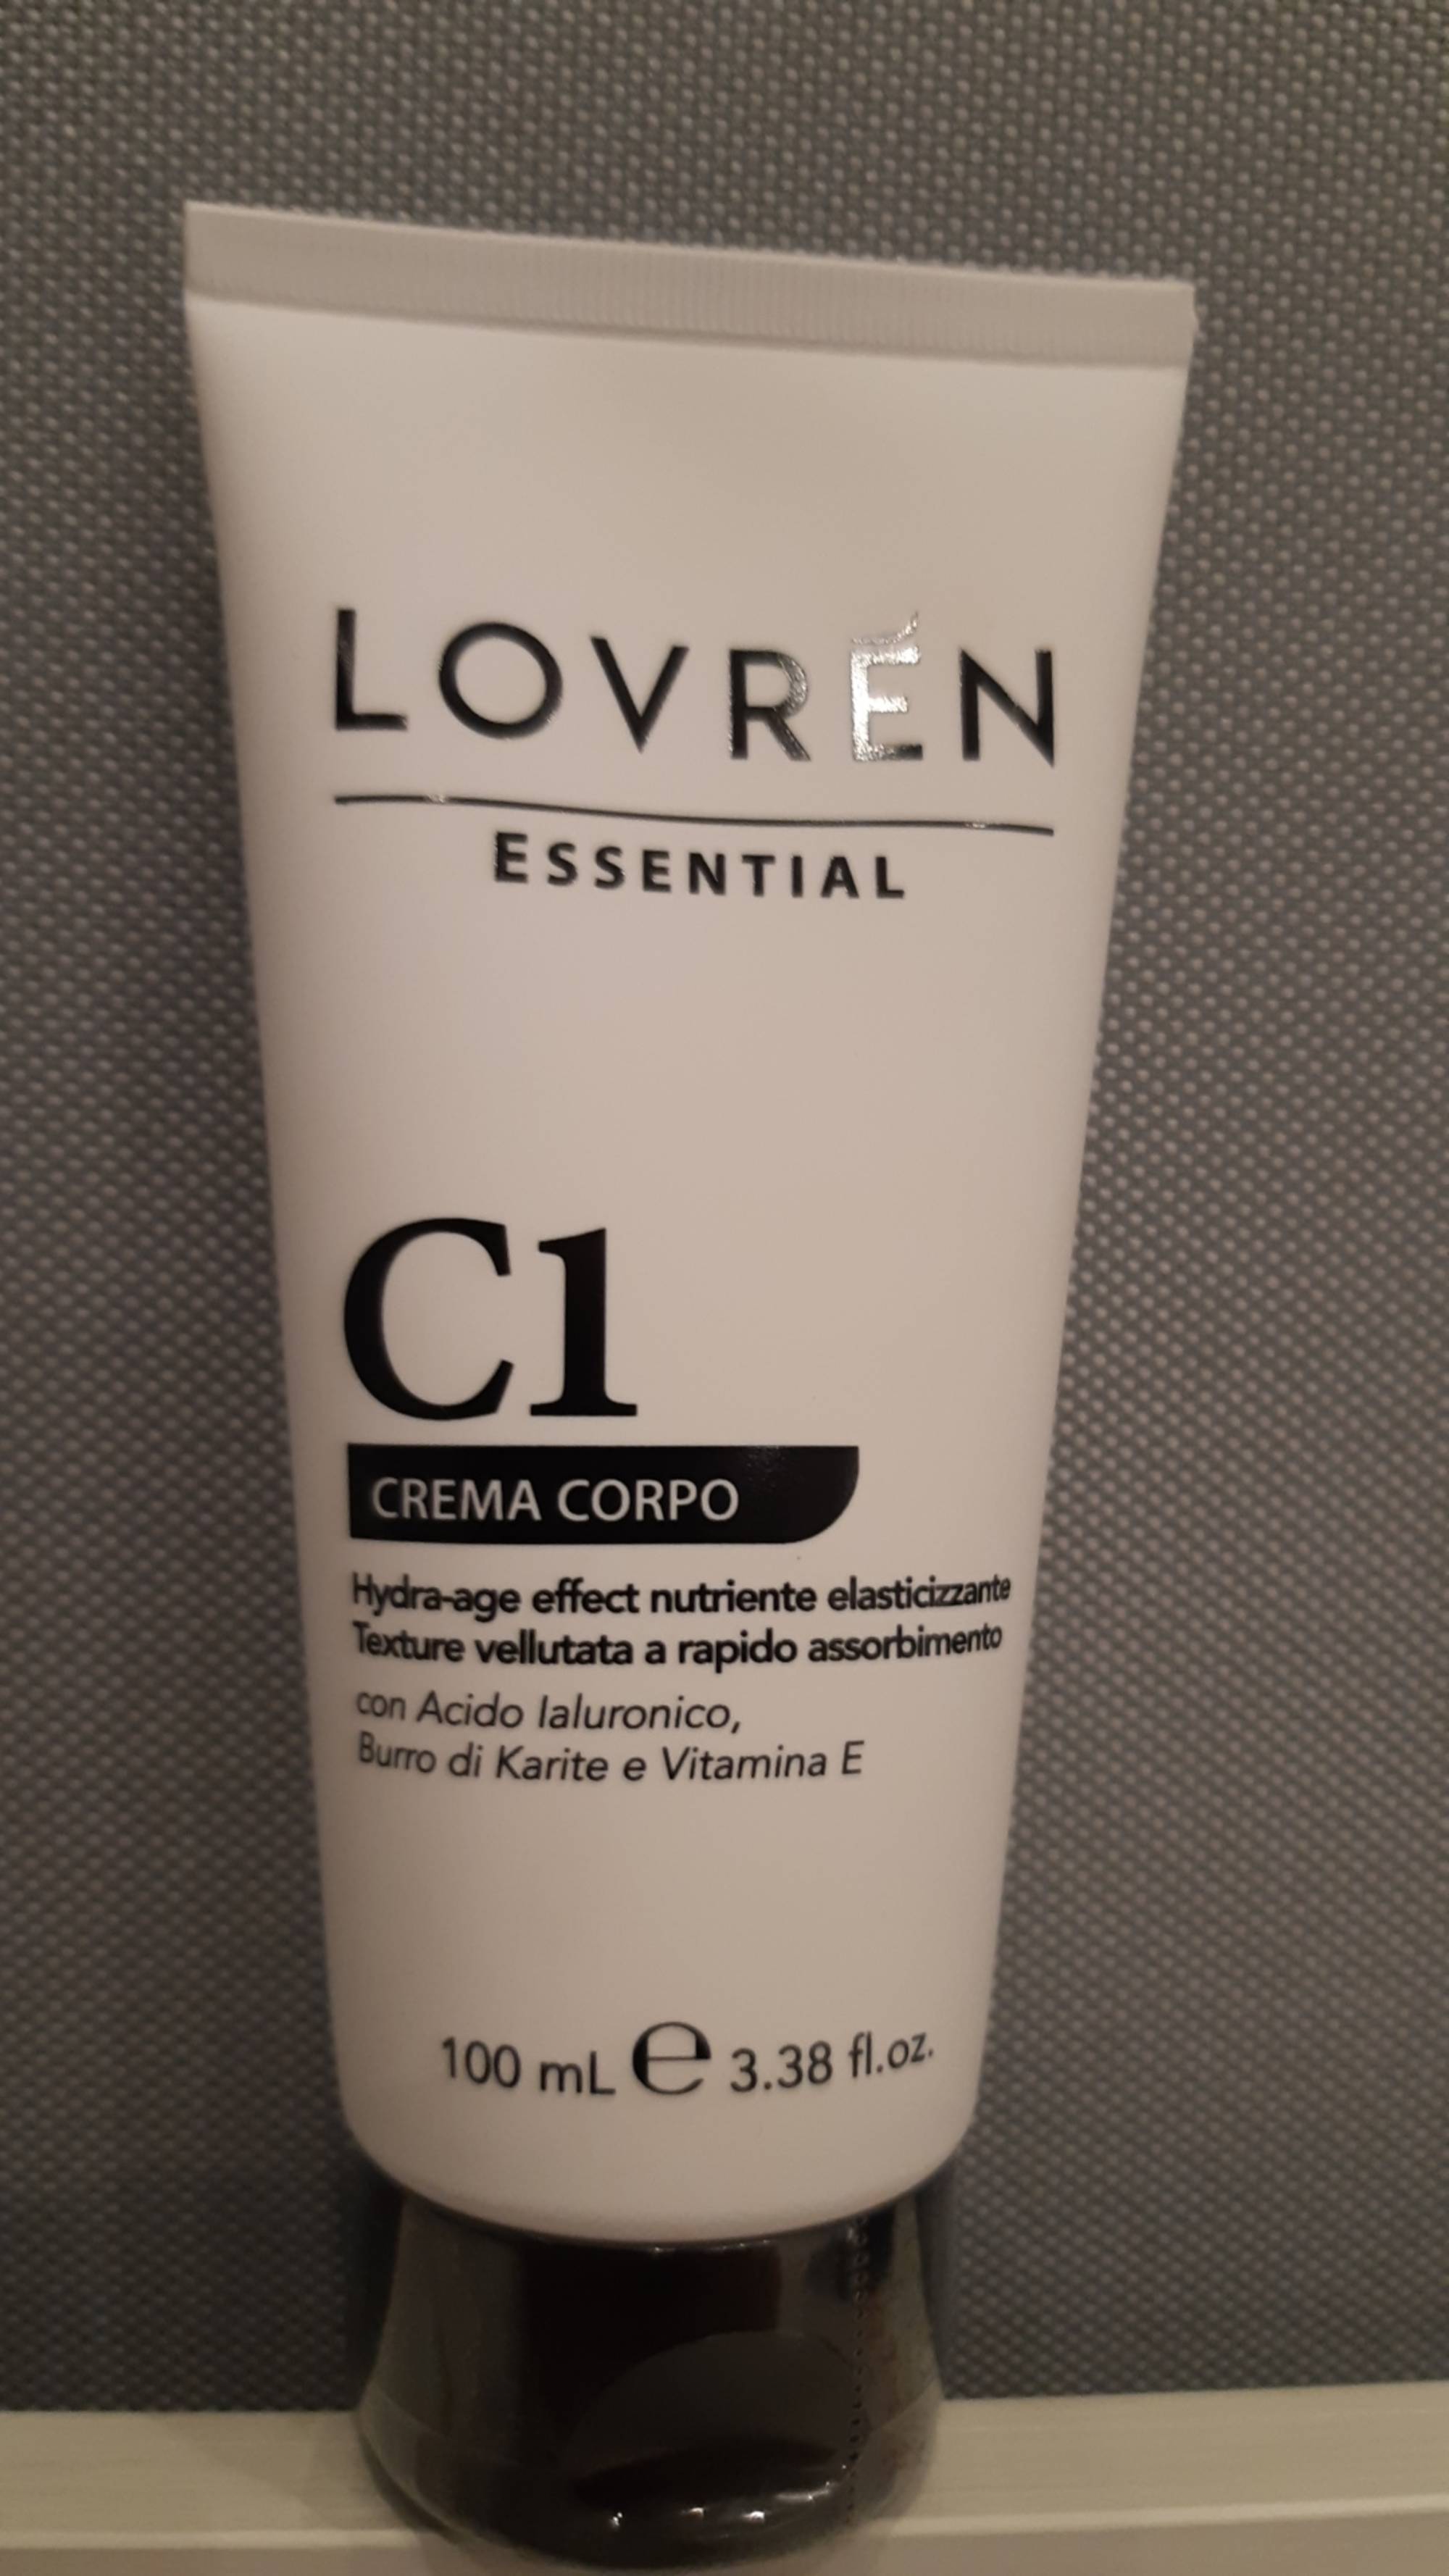 LOVREN - Essential C1 - Crema corpo